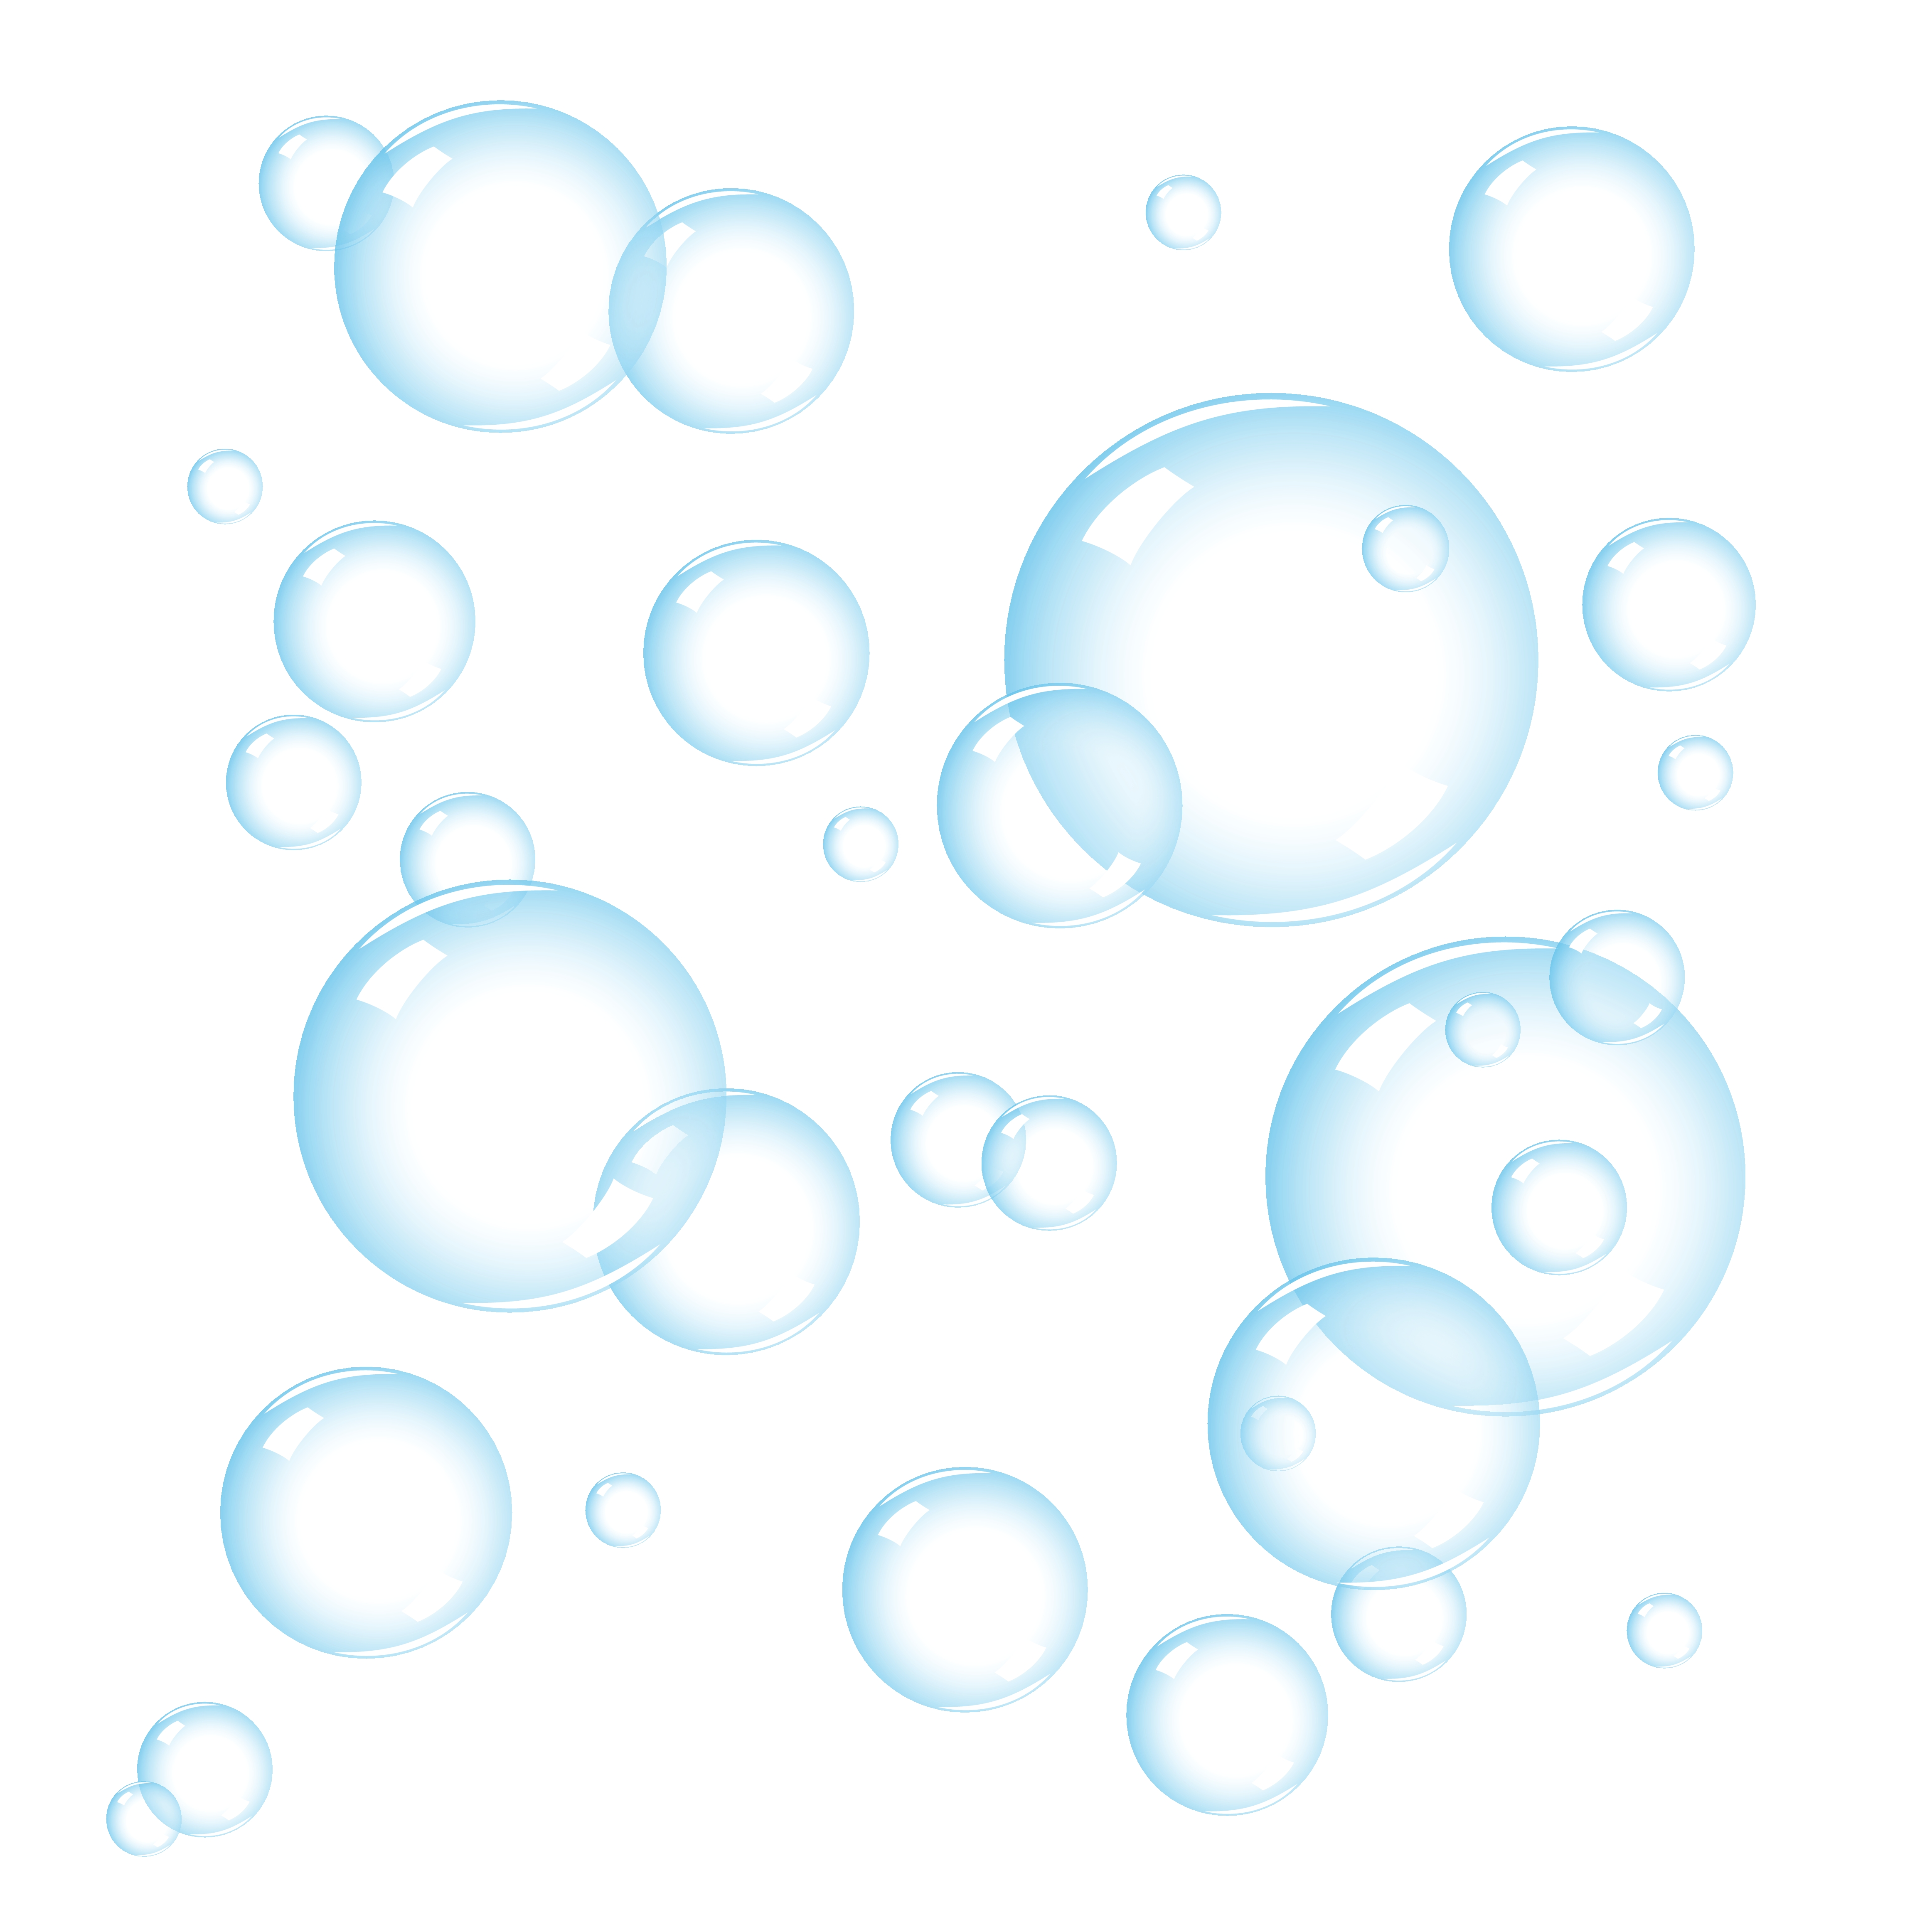 Bubbles Clip Art Free   Cliparts Co